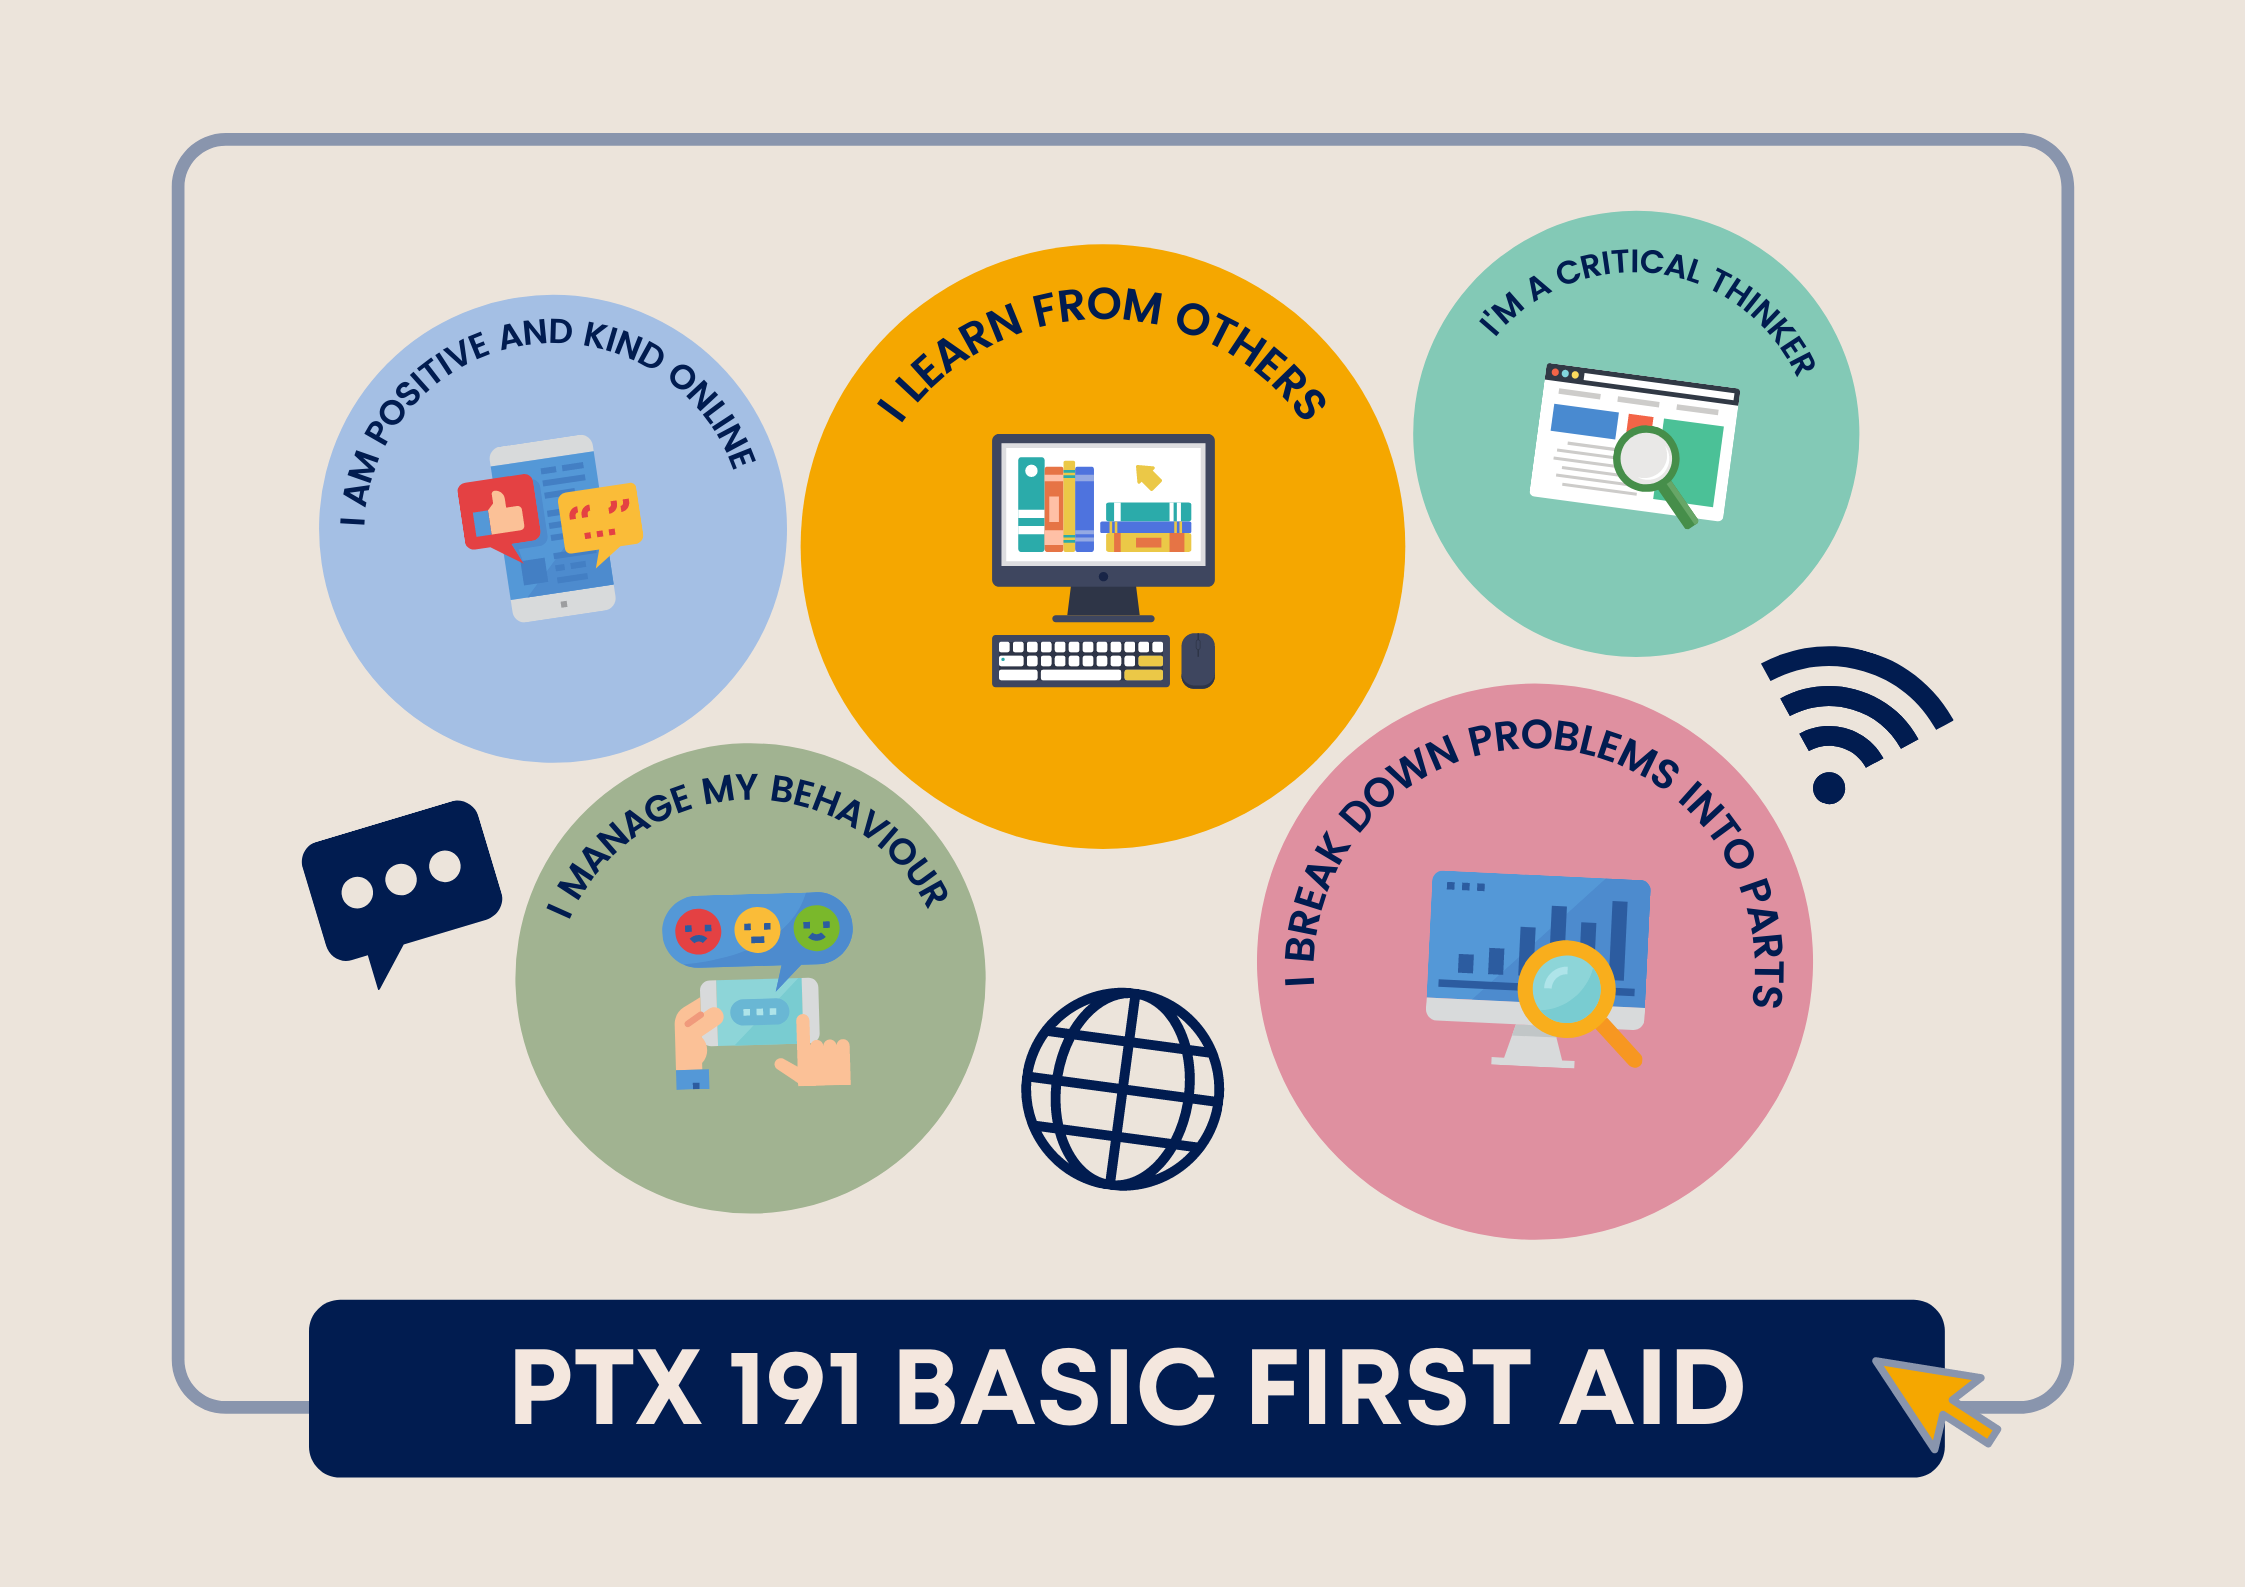 PTX 191 Basic first aid